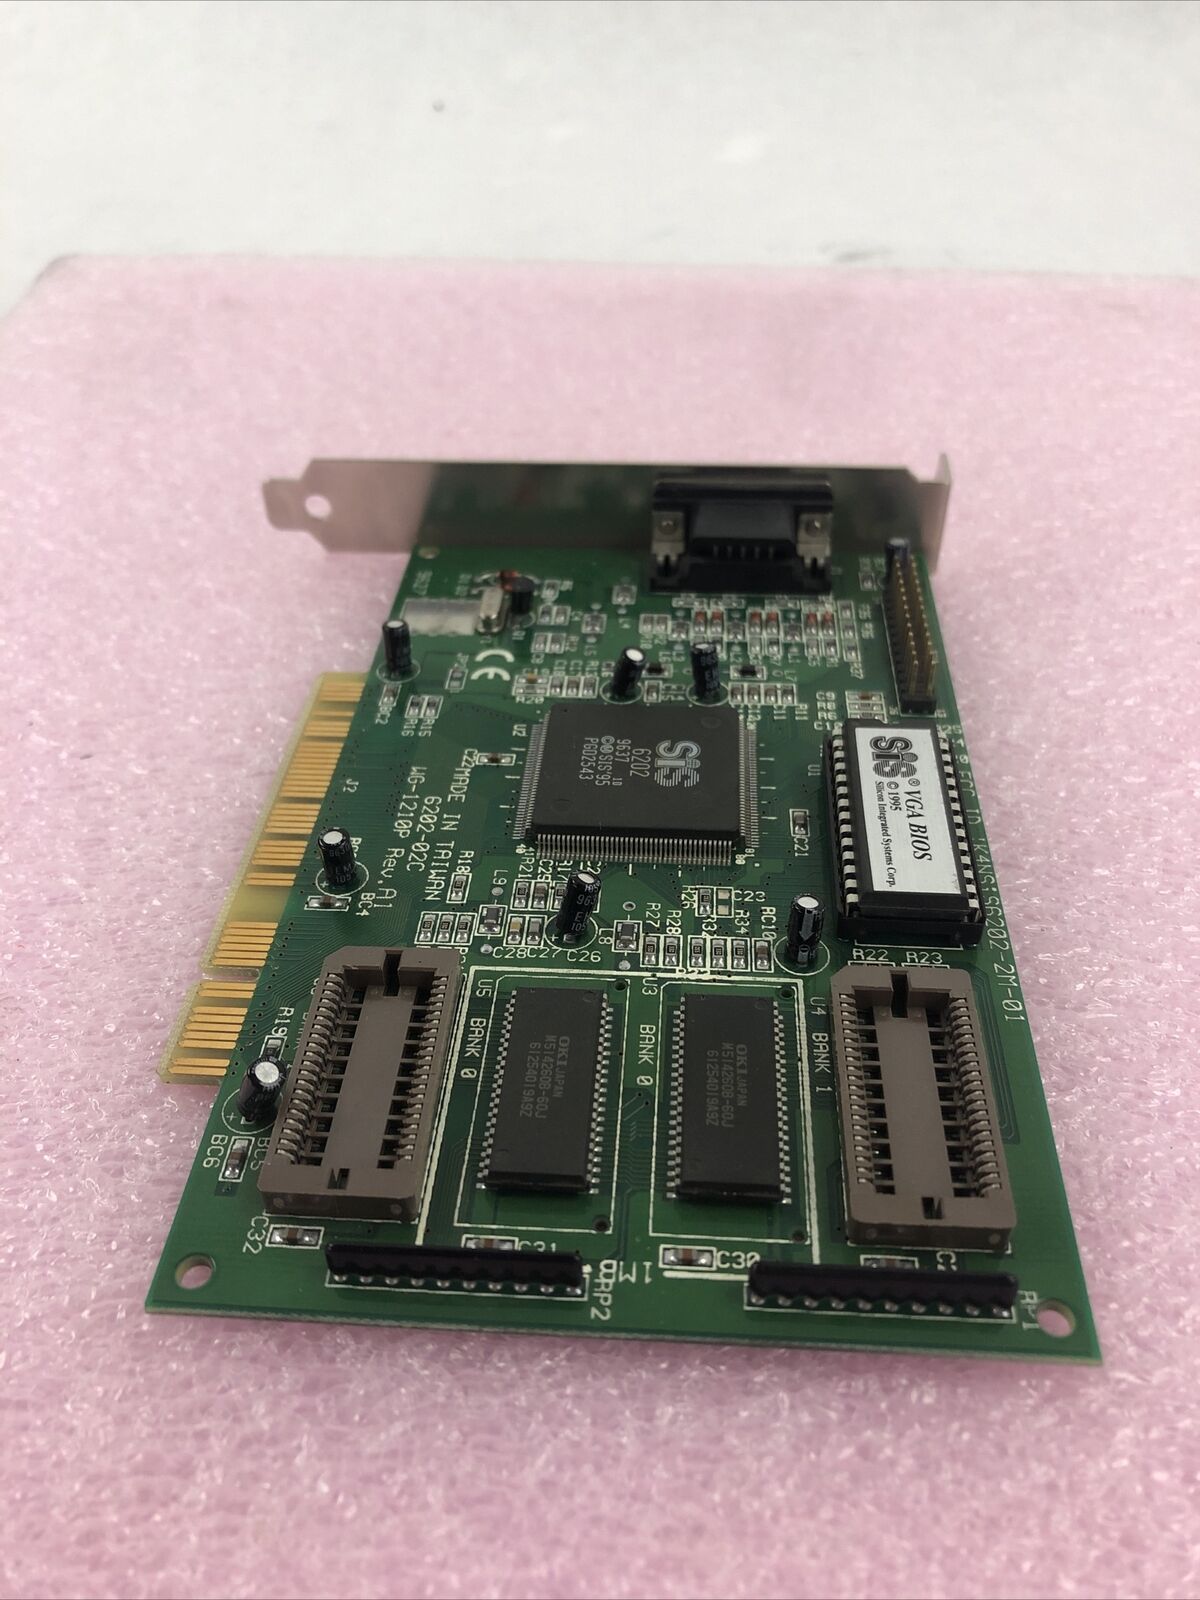 Silicon Integrated 6202-02C WG-1210P Rev.A1 VGA Video Card